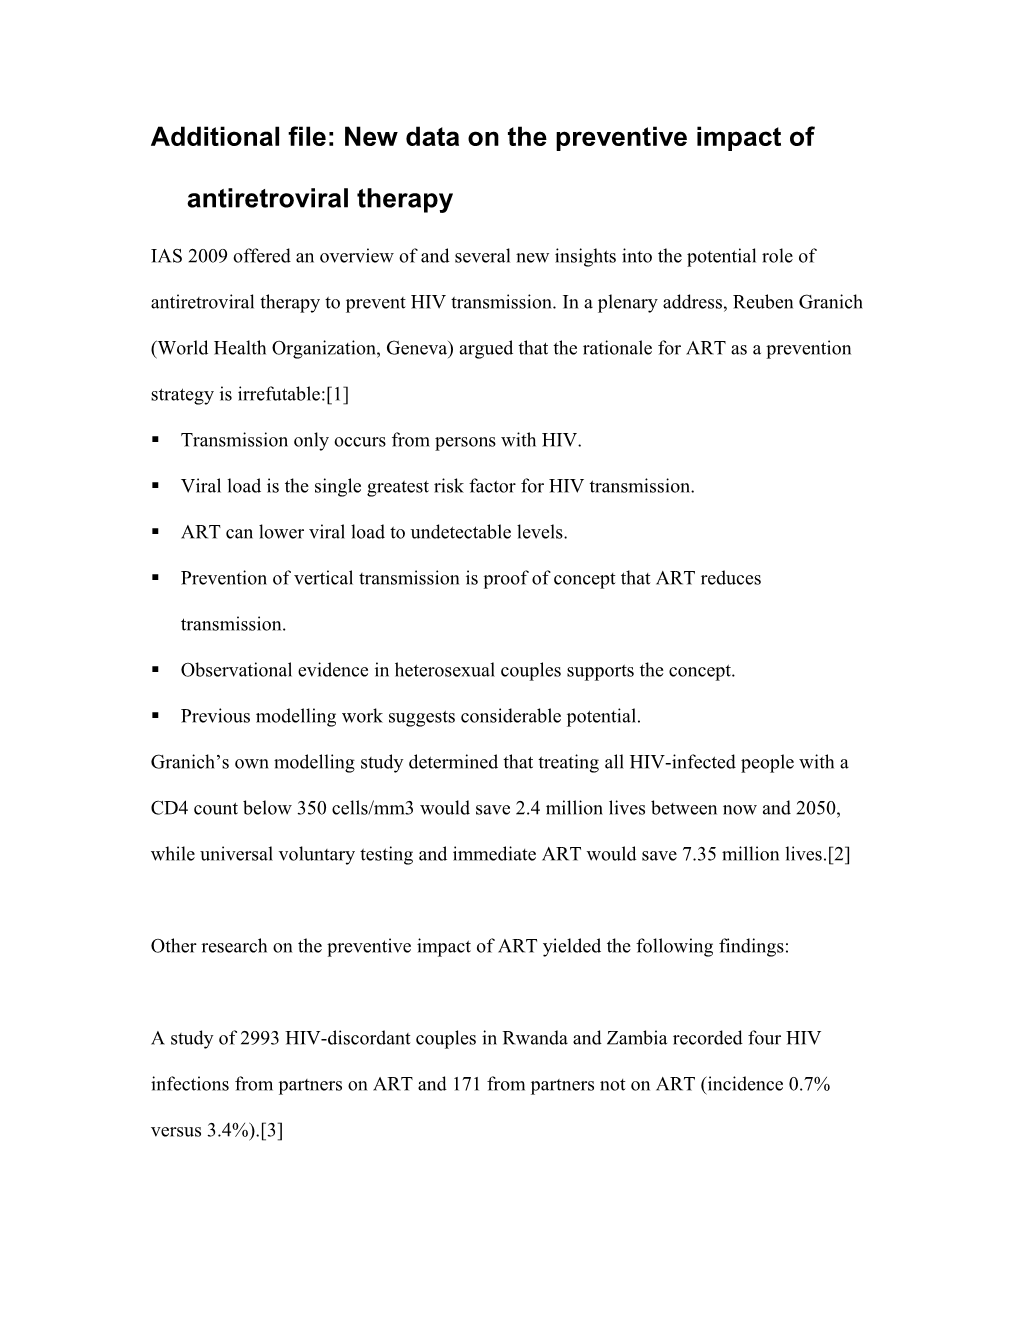 Figure 3: New Data on the Preventive Impact of Antiretroviral Therapy